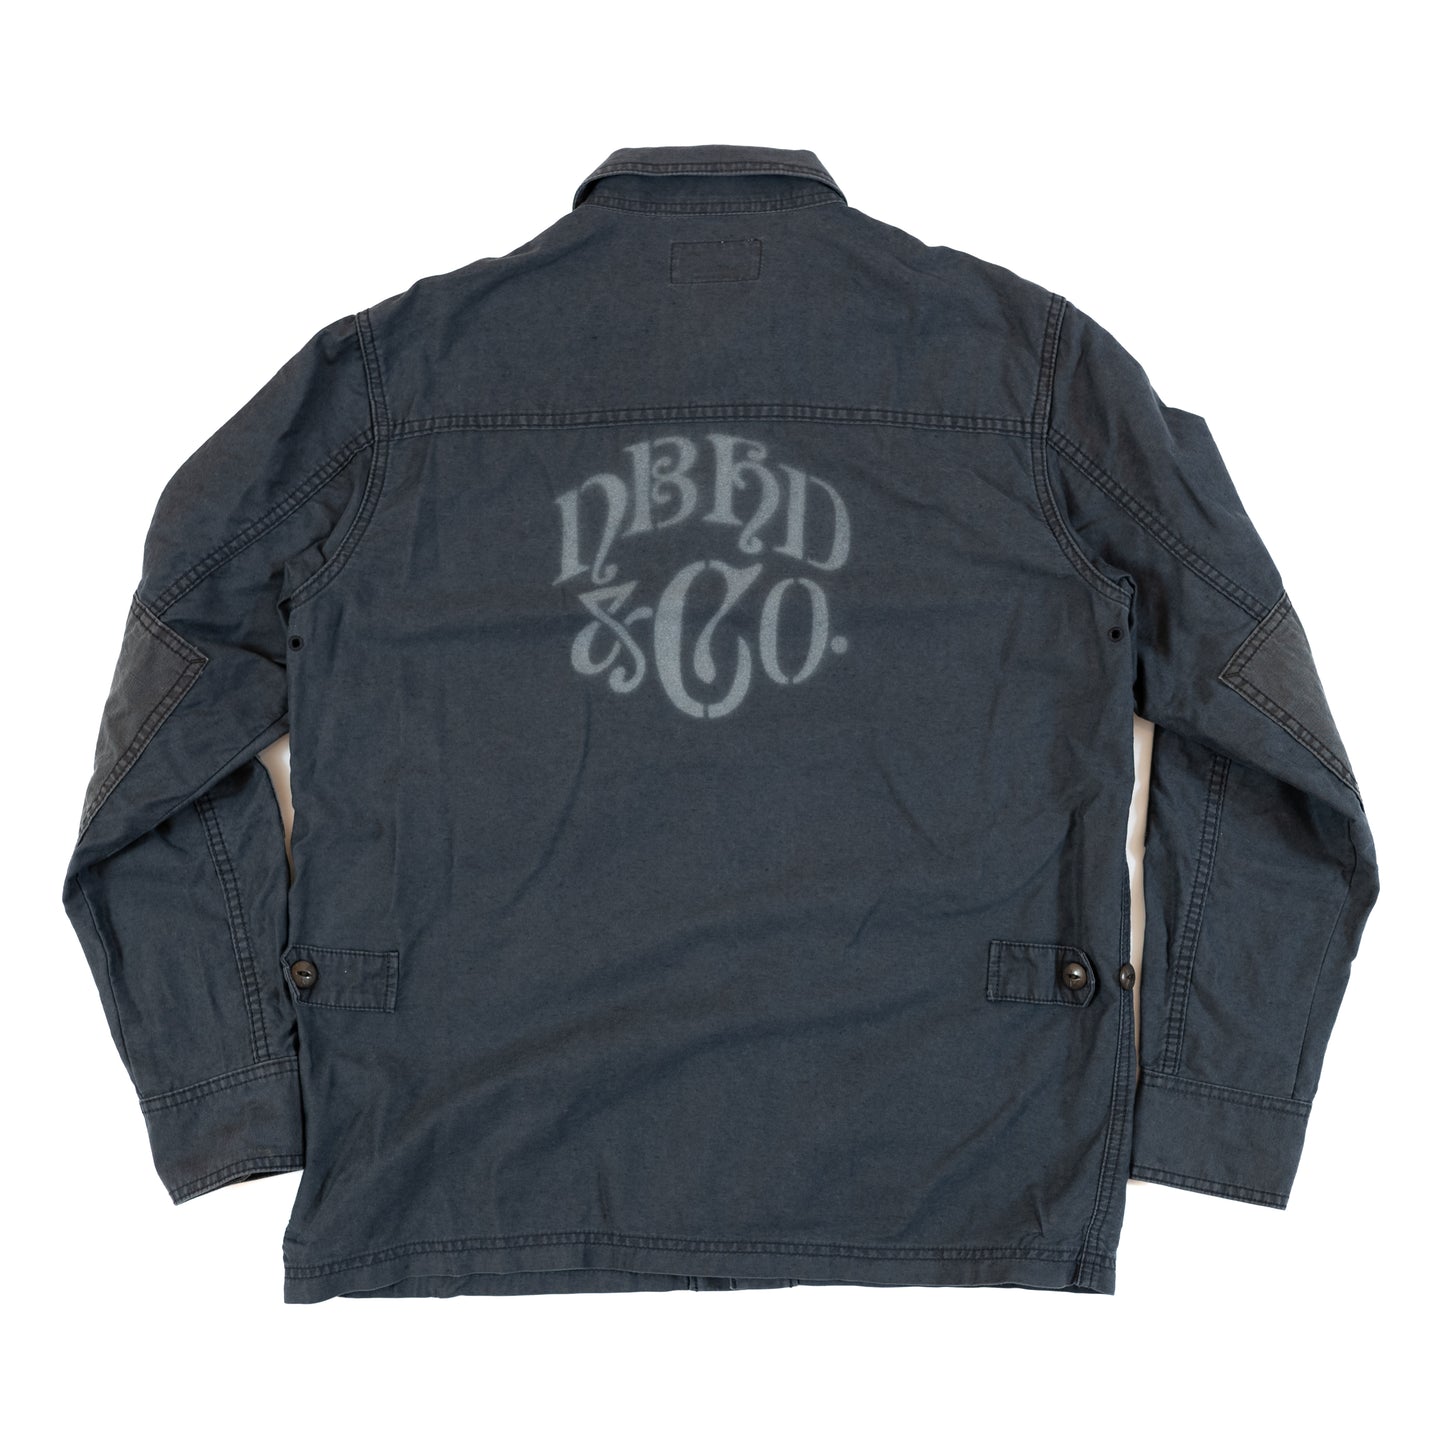 Neighborbood "NBHD & Co." Shirt Jacket